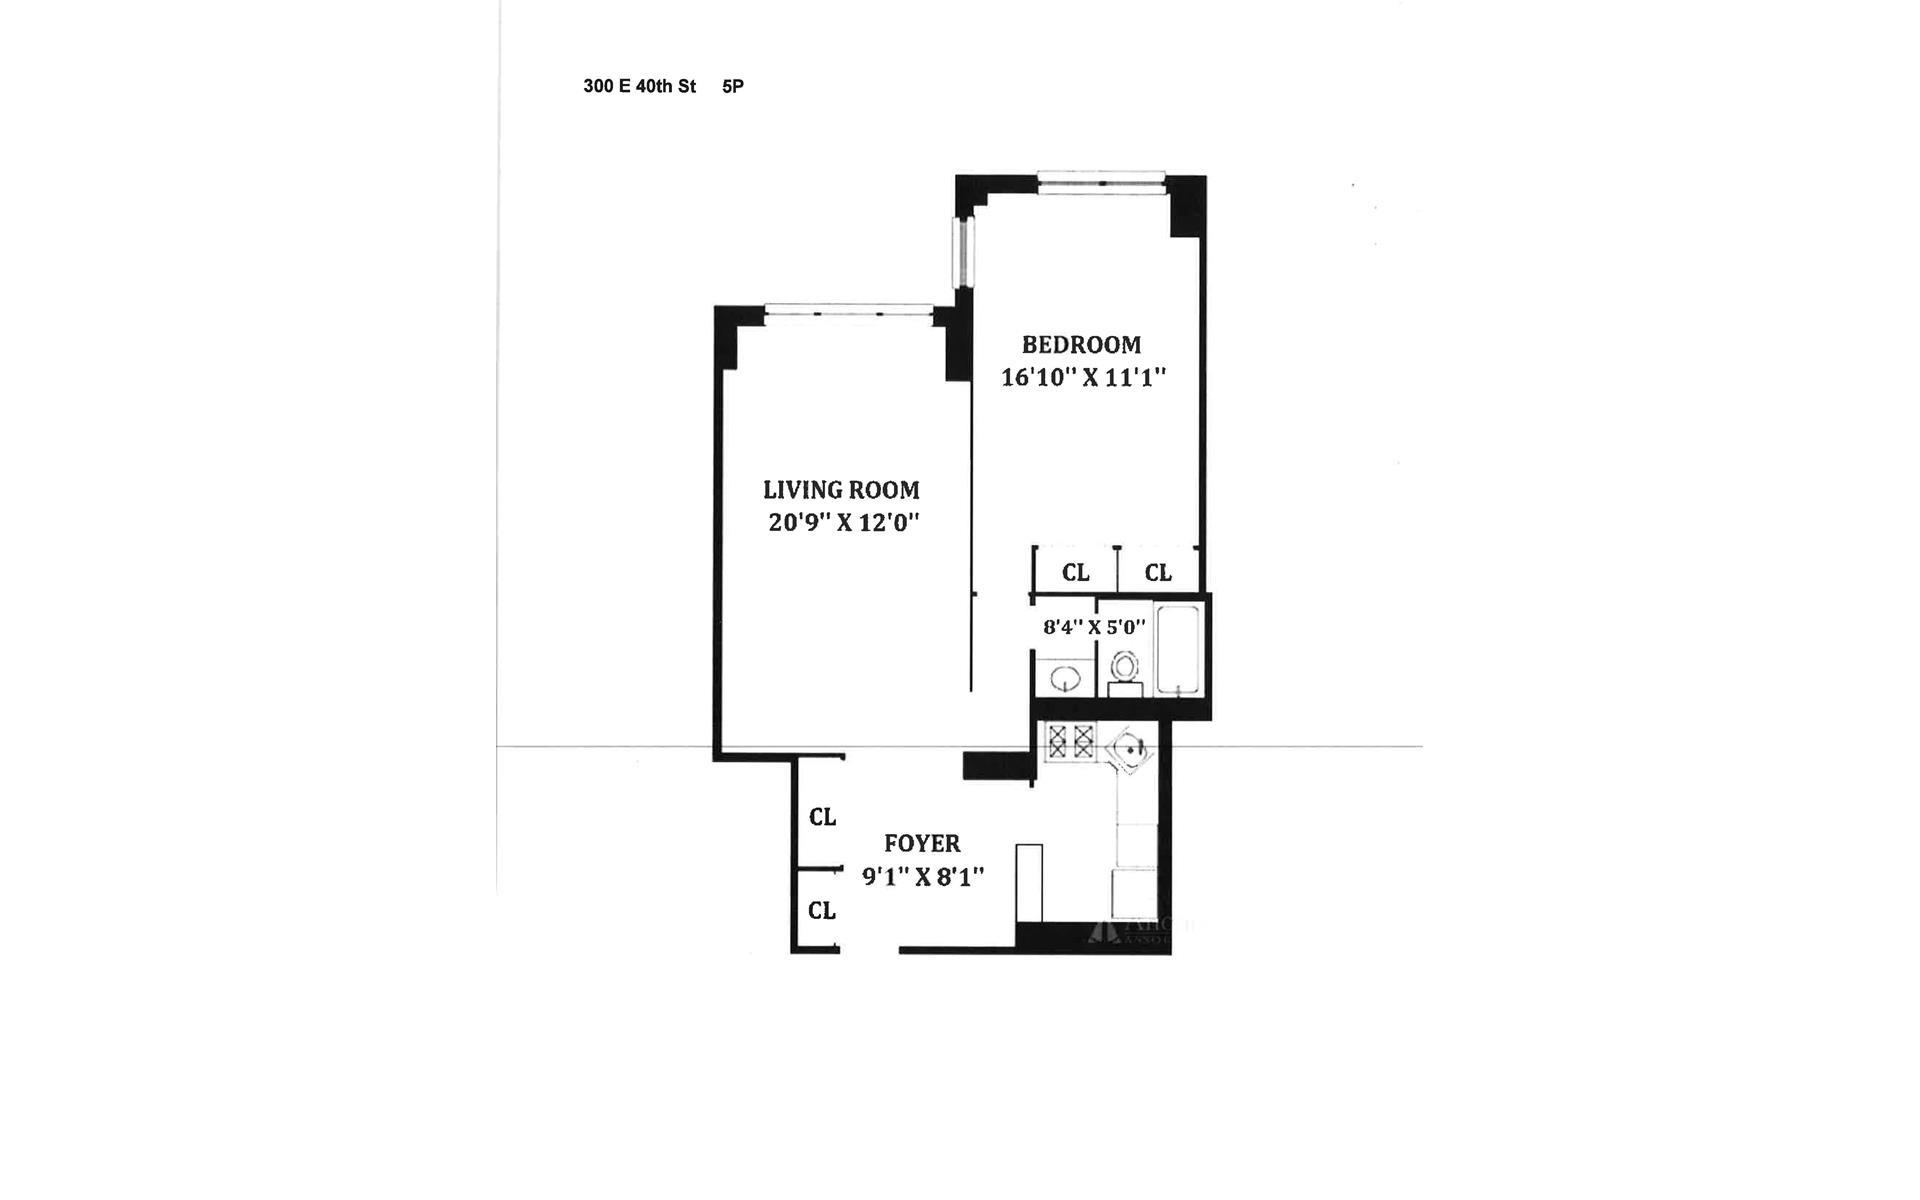 Floorplan for 300 East 40th Street, 5P